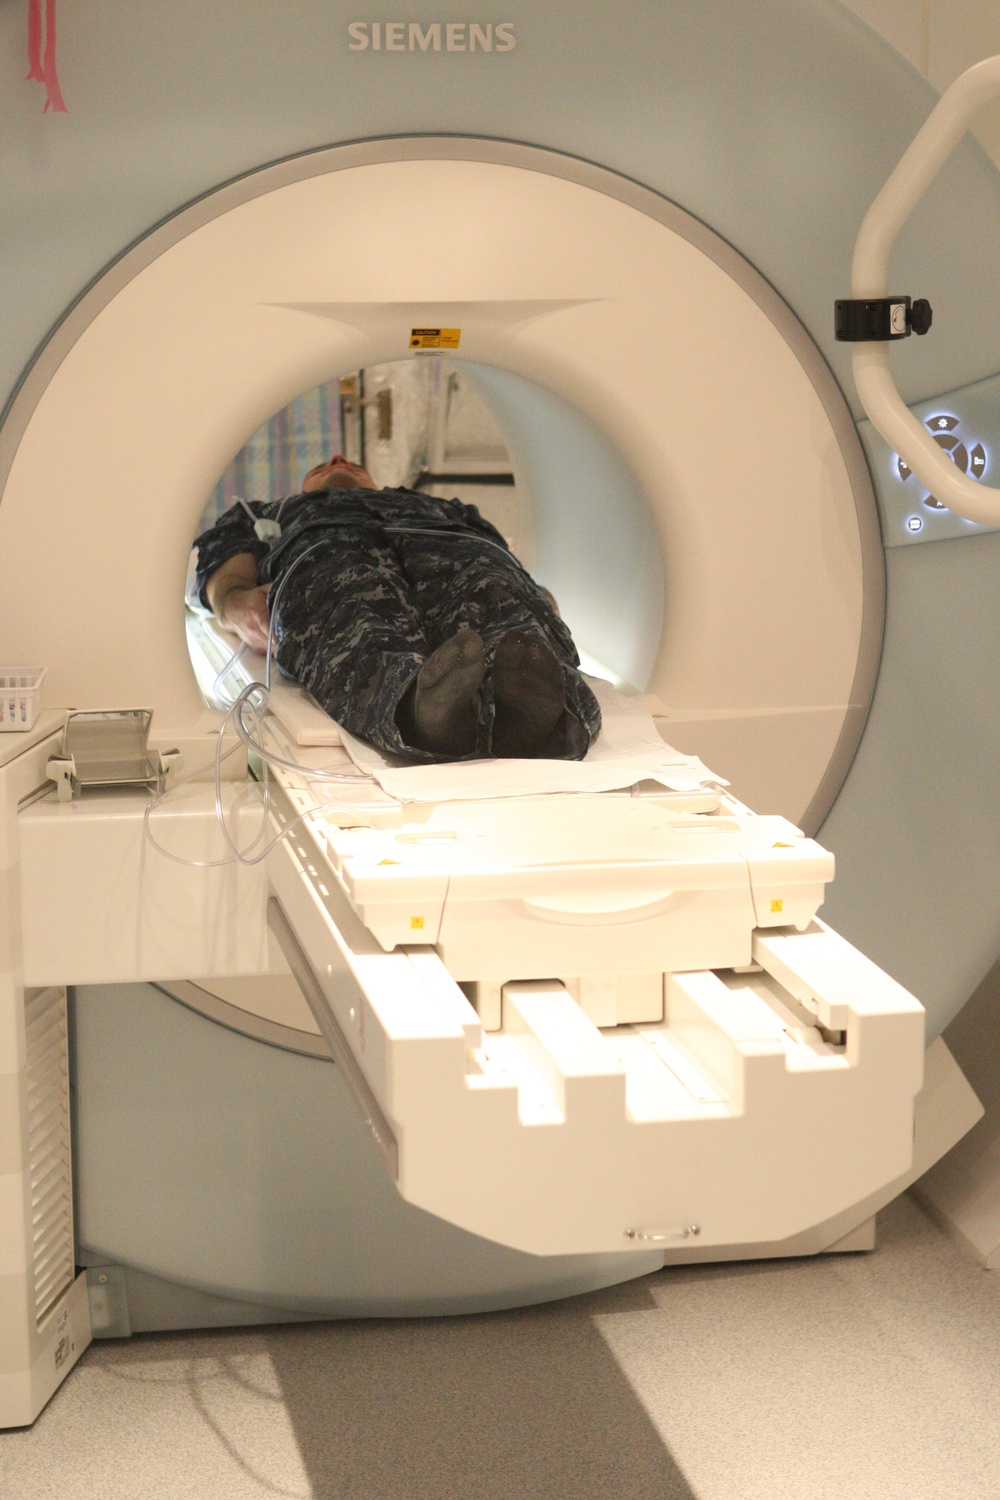 NHCL Unveils New, Improved MRI Unit